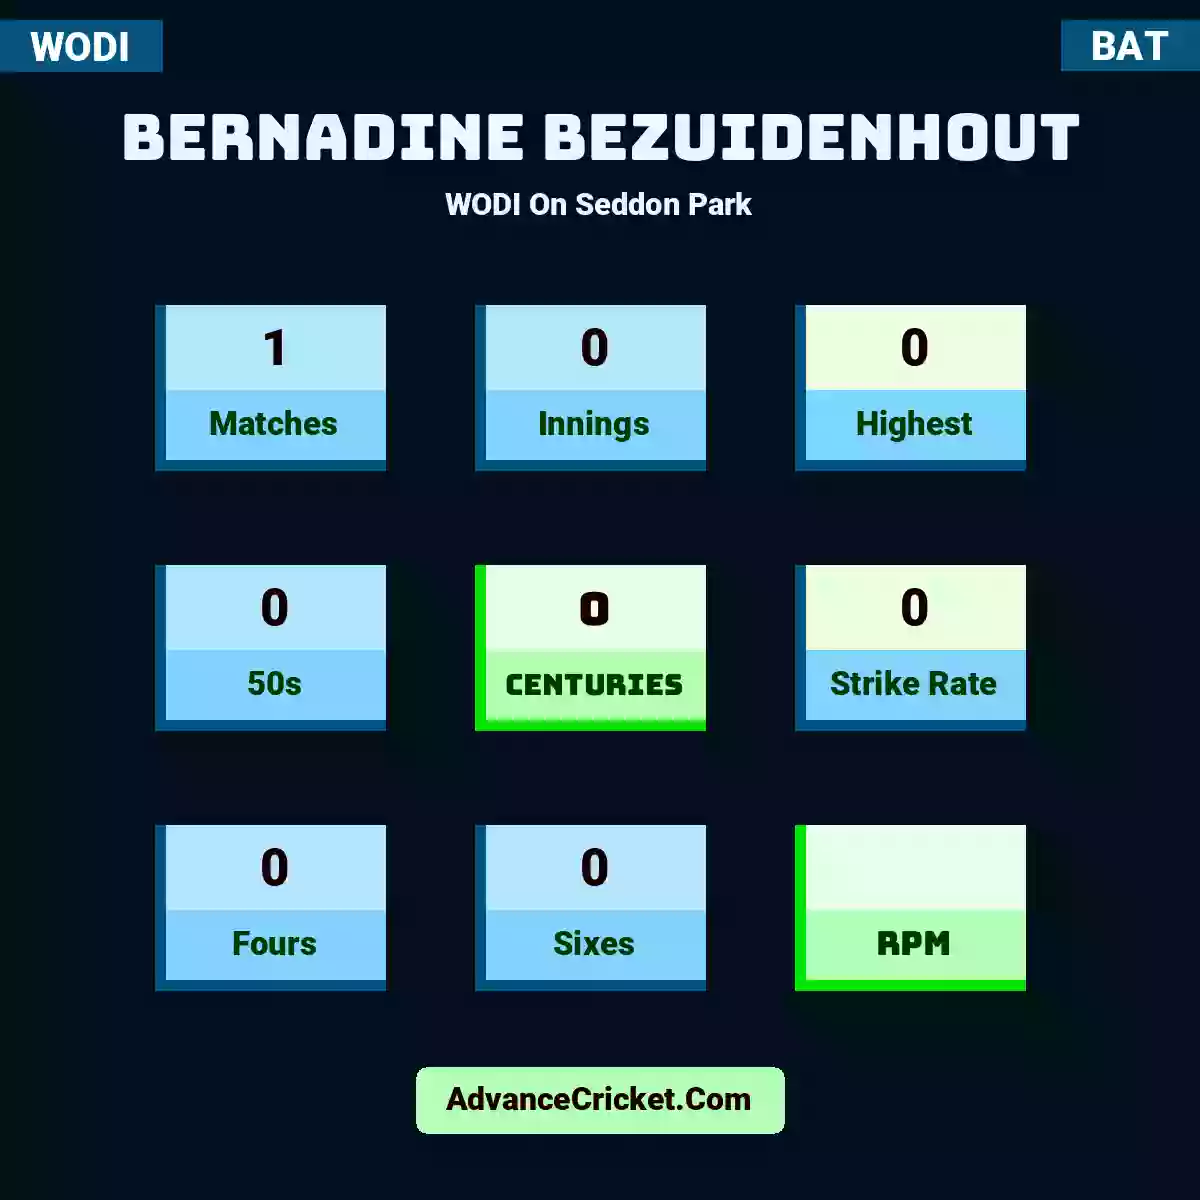 Bernadine Bezuidenhout WODI  On Seddon Park, Bernadine Bezuidenhout played 1 matches, scored 0 runs as highest, 0 half-centuries, and 0 centuries, with a strike rate of 0. B.Bezuidenhout hit 0 fours and 0 sixes.